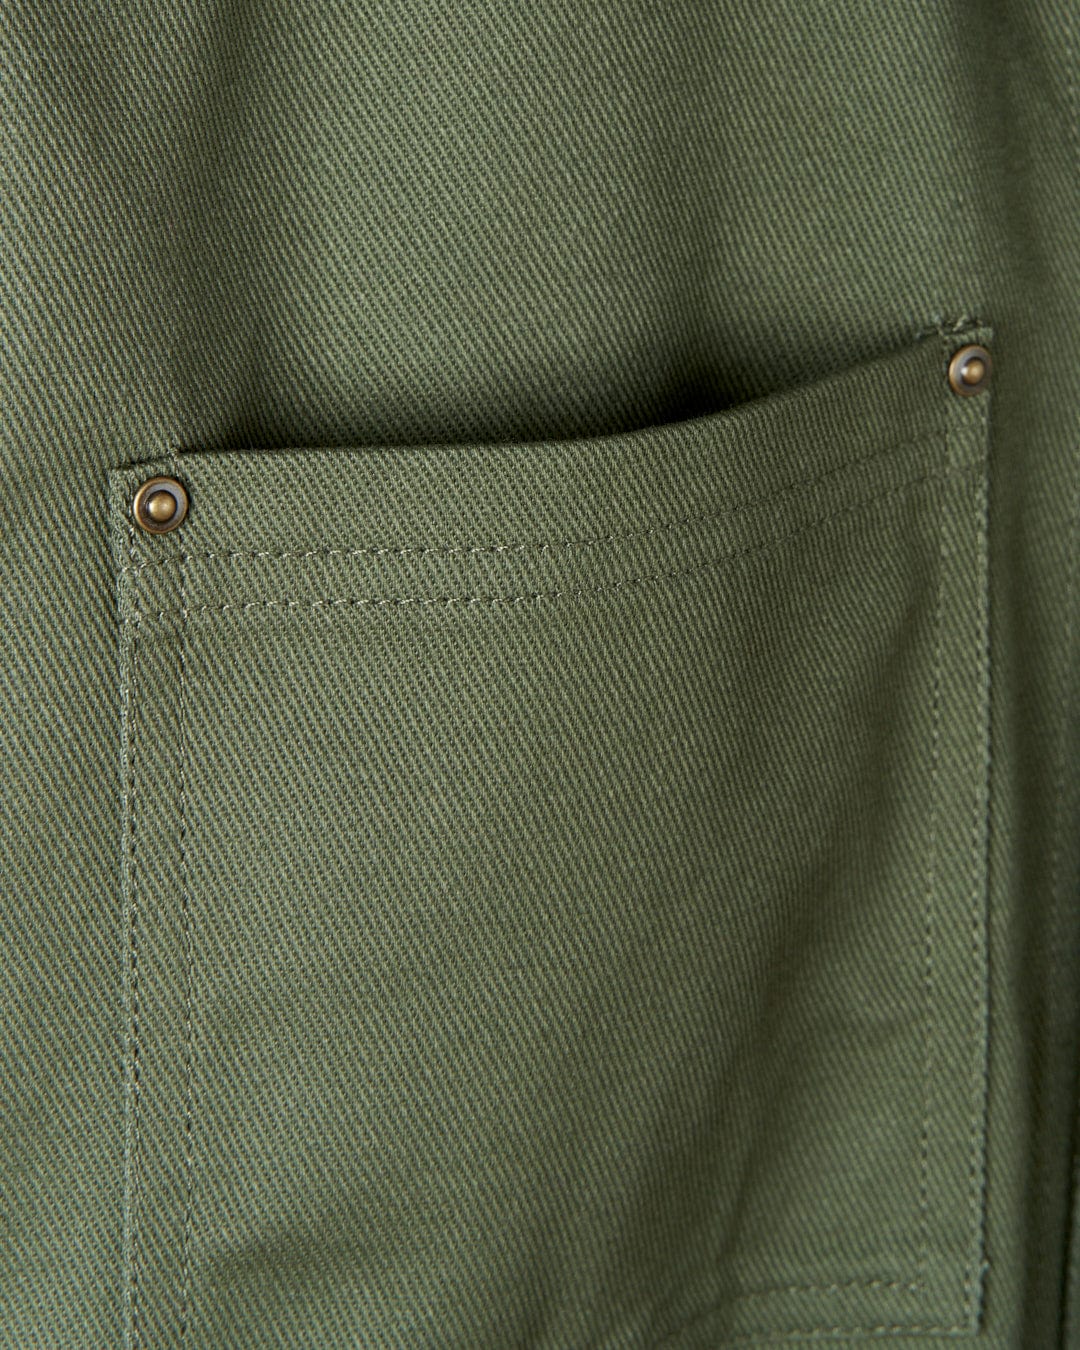 A close up of a Saltrock Barden - Womens Lightweight Utility Jacket - Dark Green cotton twill pocket on a jacket.